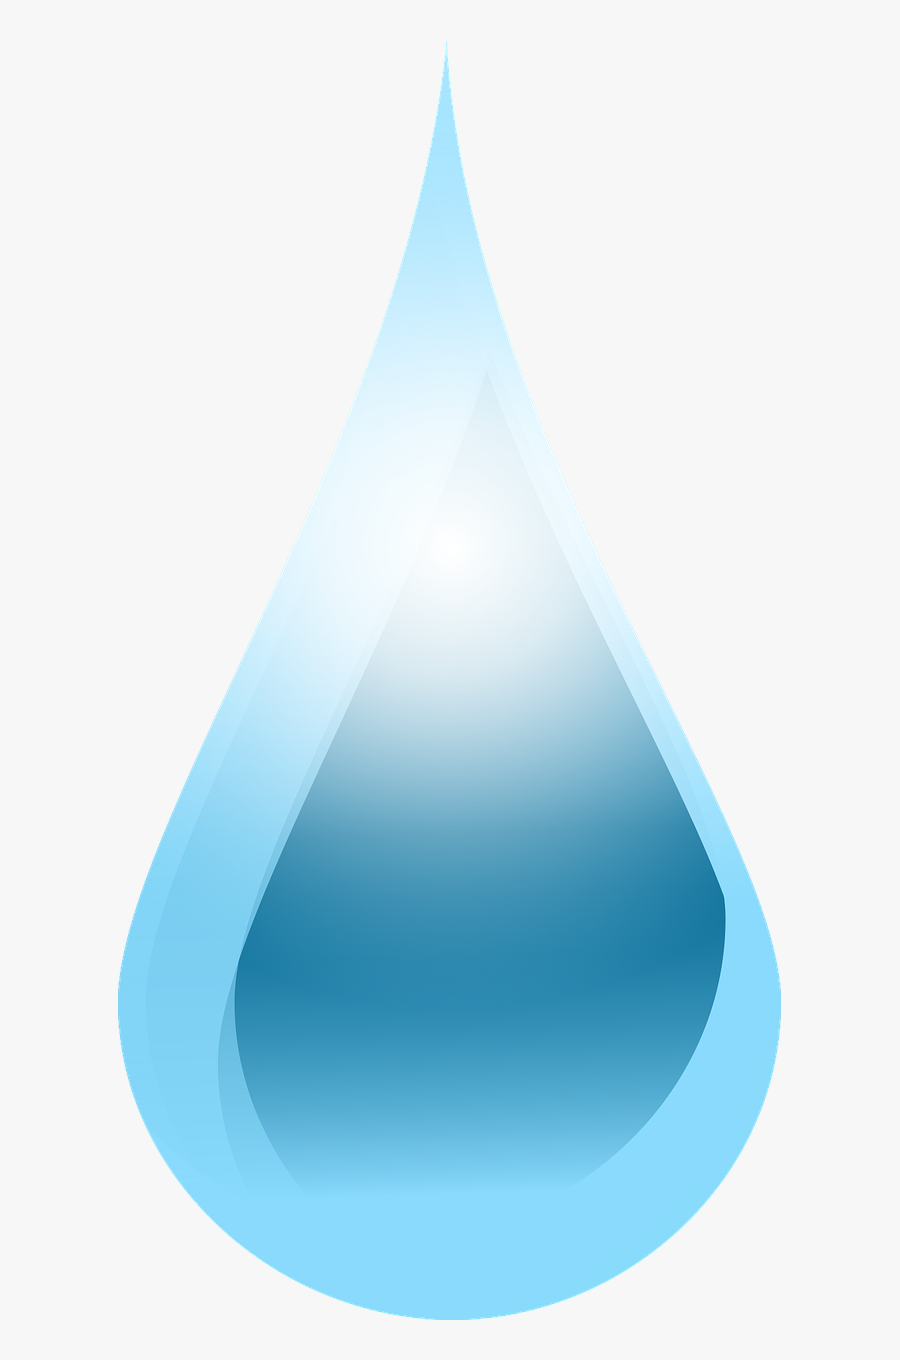 Drop Liquid Water Png Image - Water Droplet, Transparent Clipart